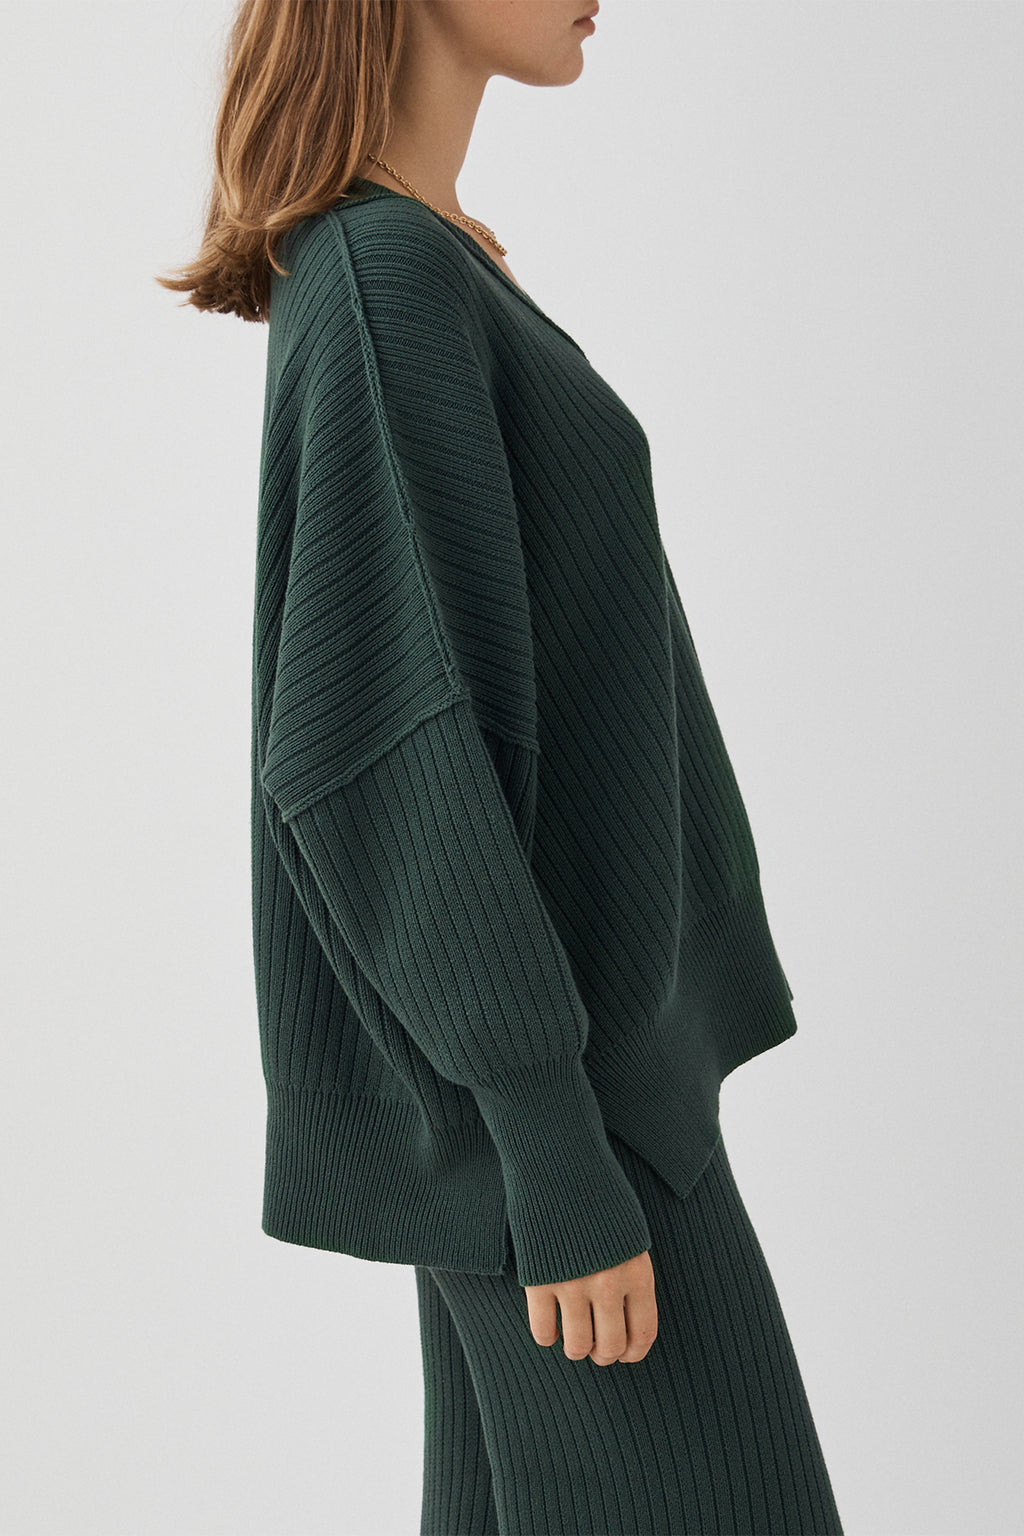 Vera Organic Knit Sweater - Forest